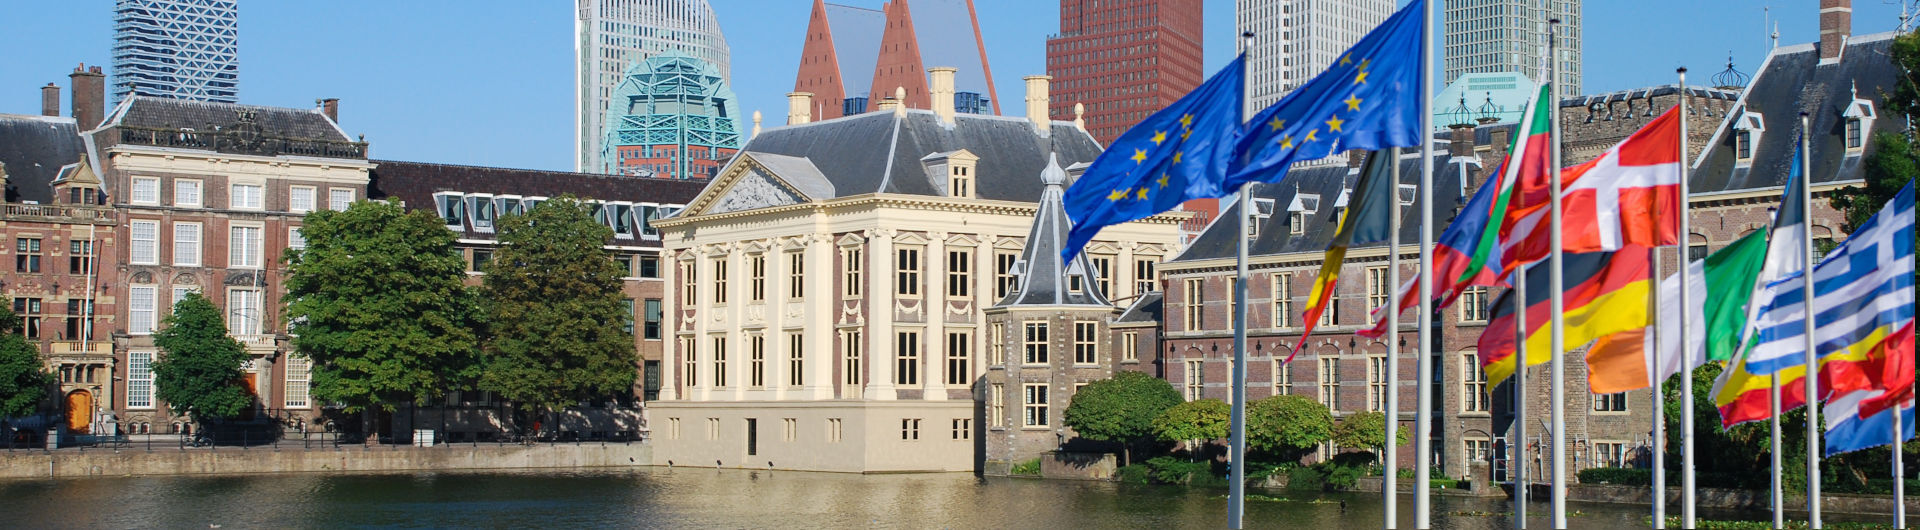 header-politiek-binnenhof-eu-vlaggen-cc0-edward-lich-via-pixabay